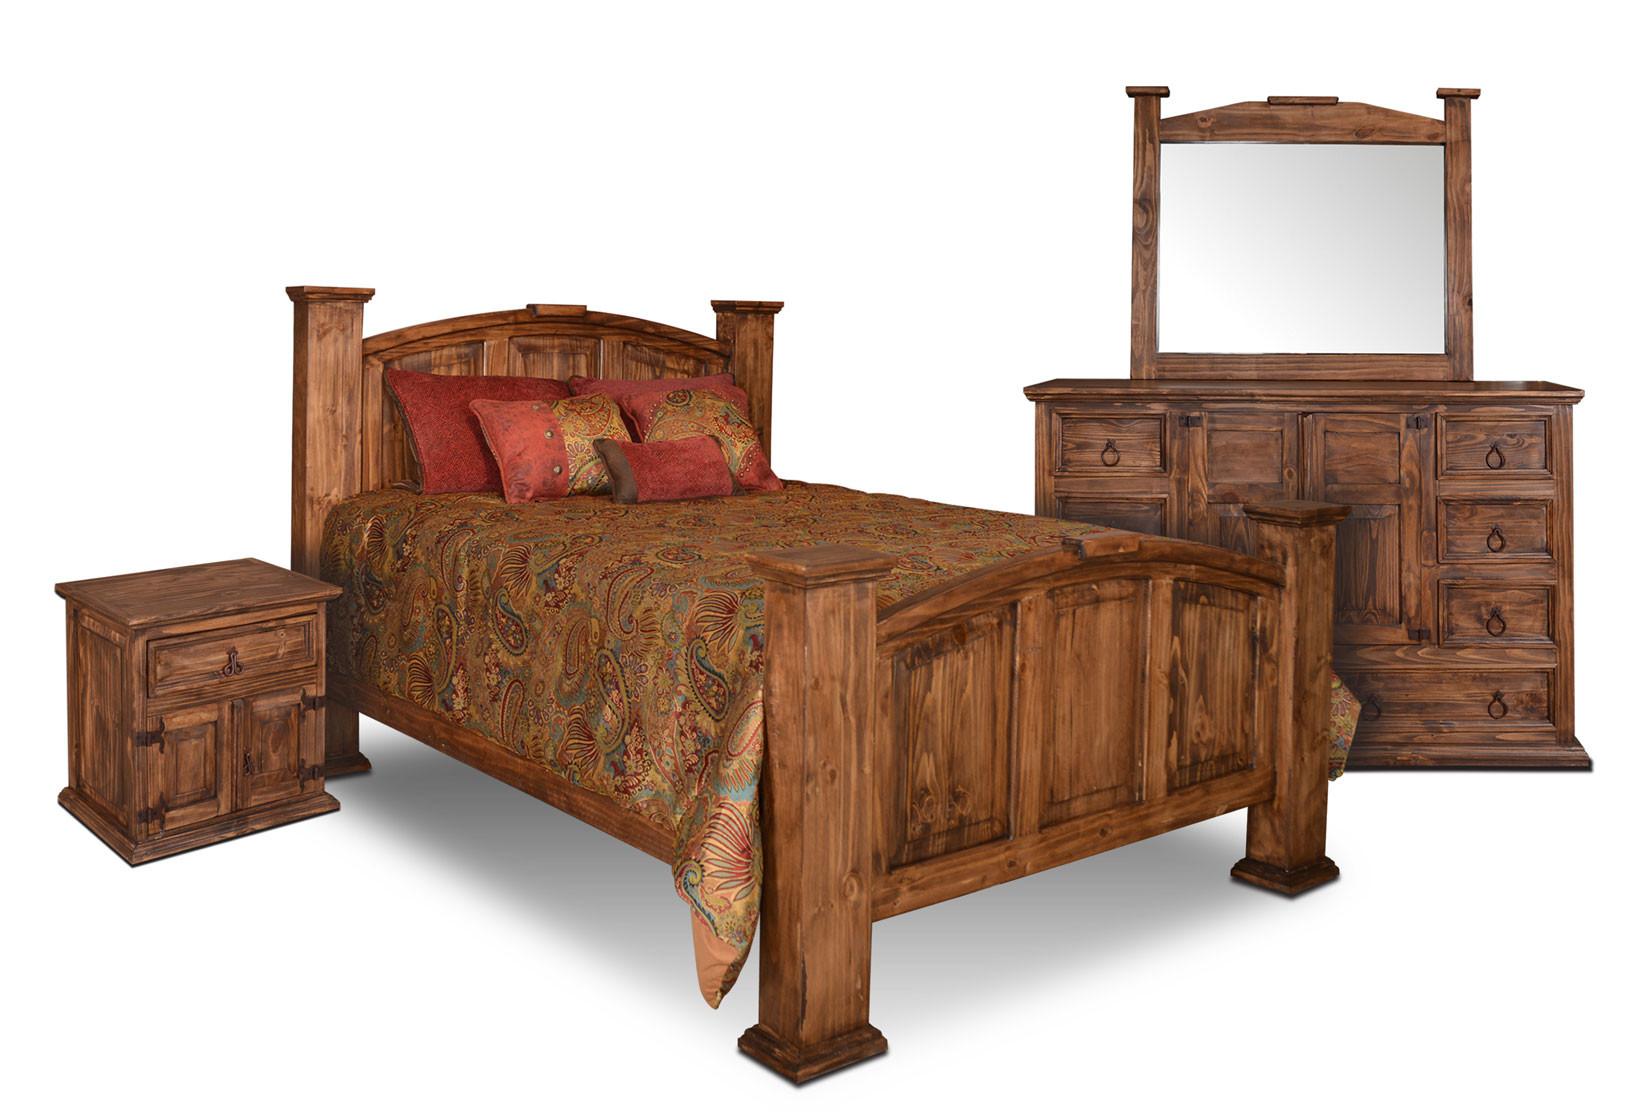 Rustic Wood Bedroom Sets
 Rustic Bedroom Set Pine Wood Bedroom Set 4 Piece Bedroom Set